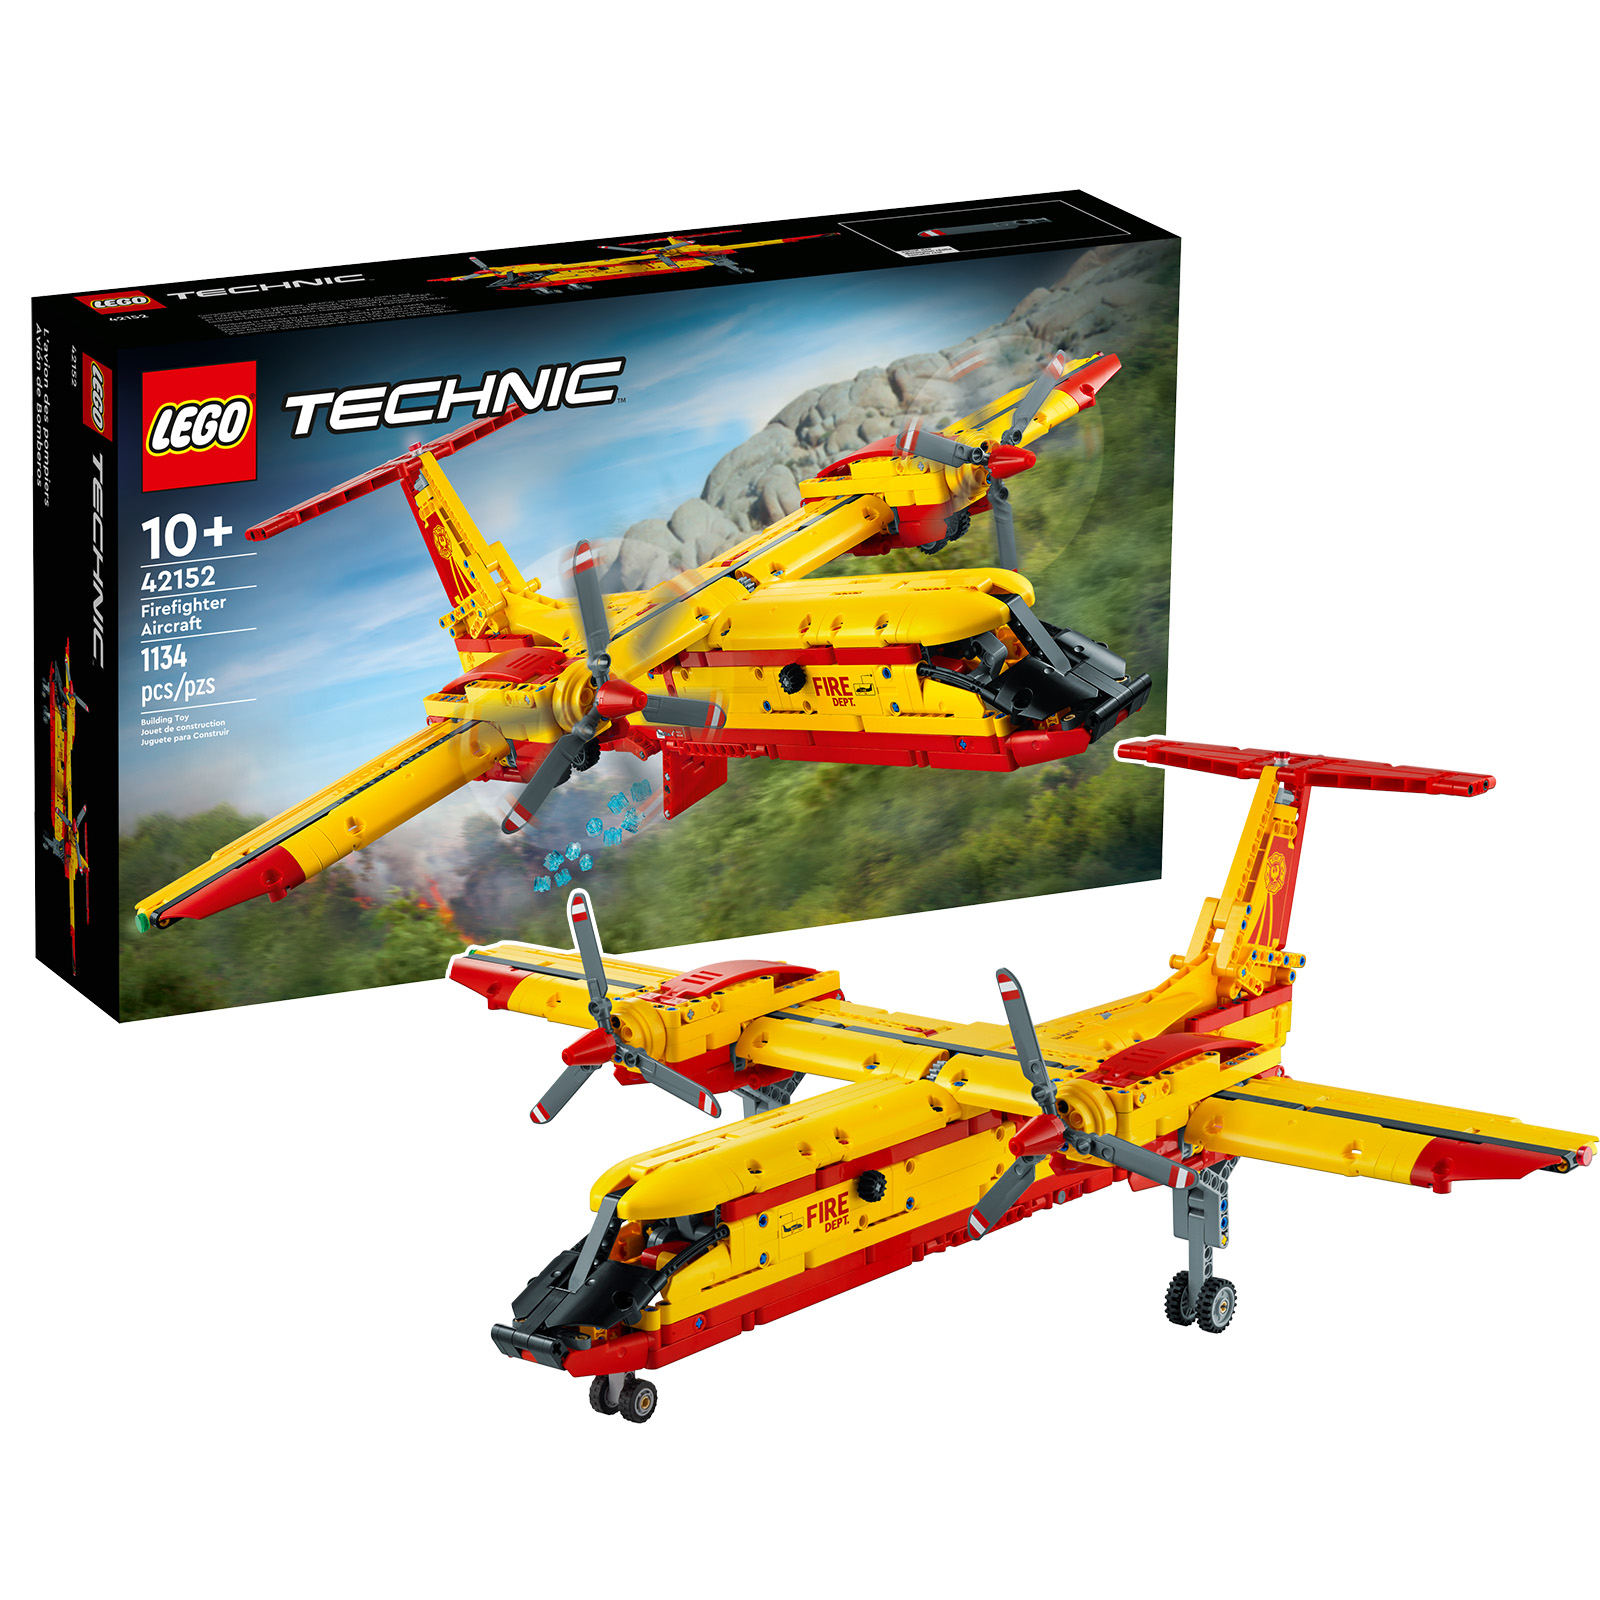 Di Toko LEGO: Set Pesawat Pemadam Kebakaran LEGO Technic 42152 sedang dipesan sebelumnya